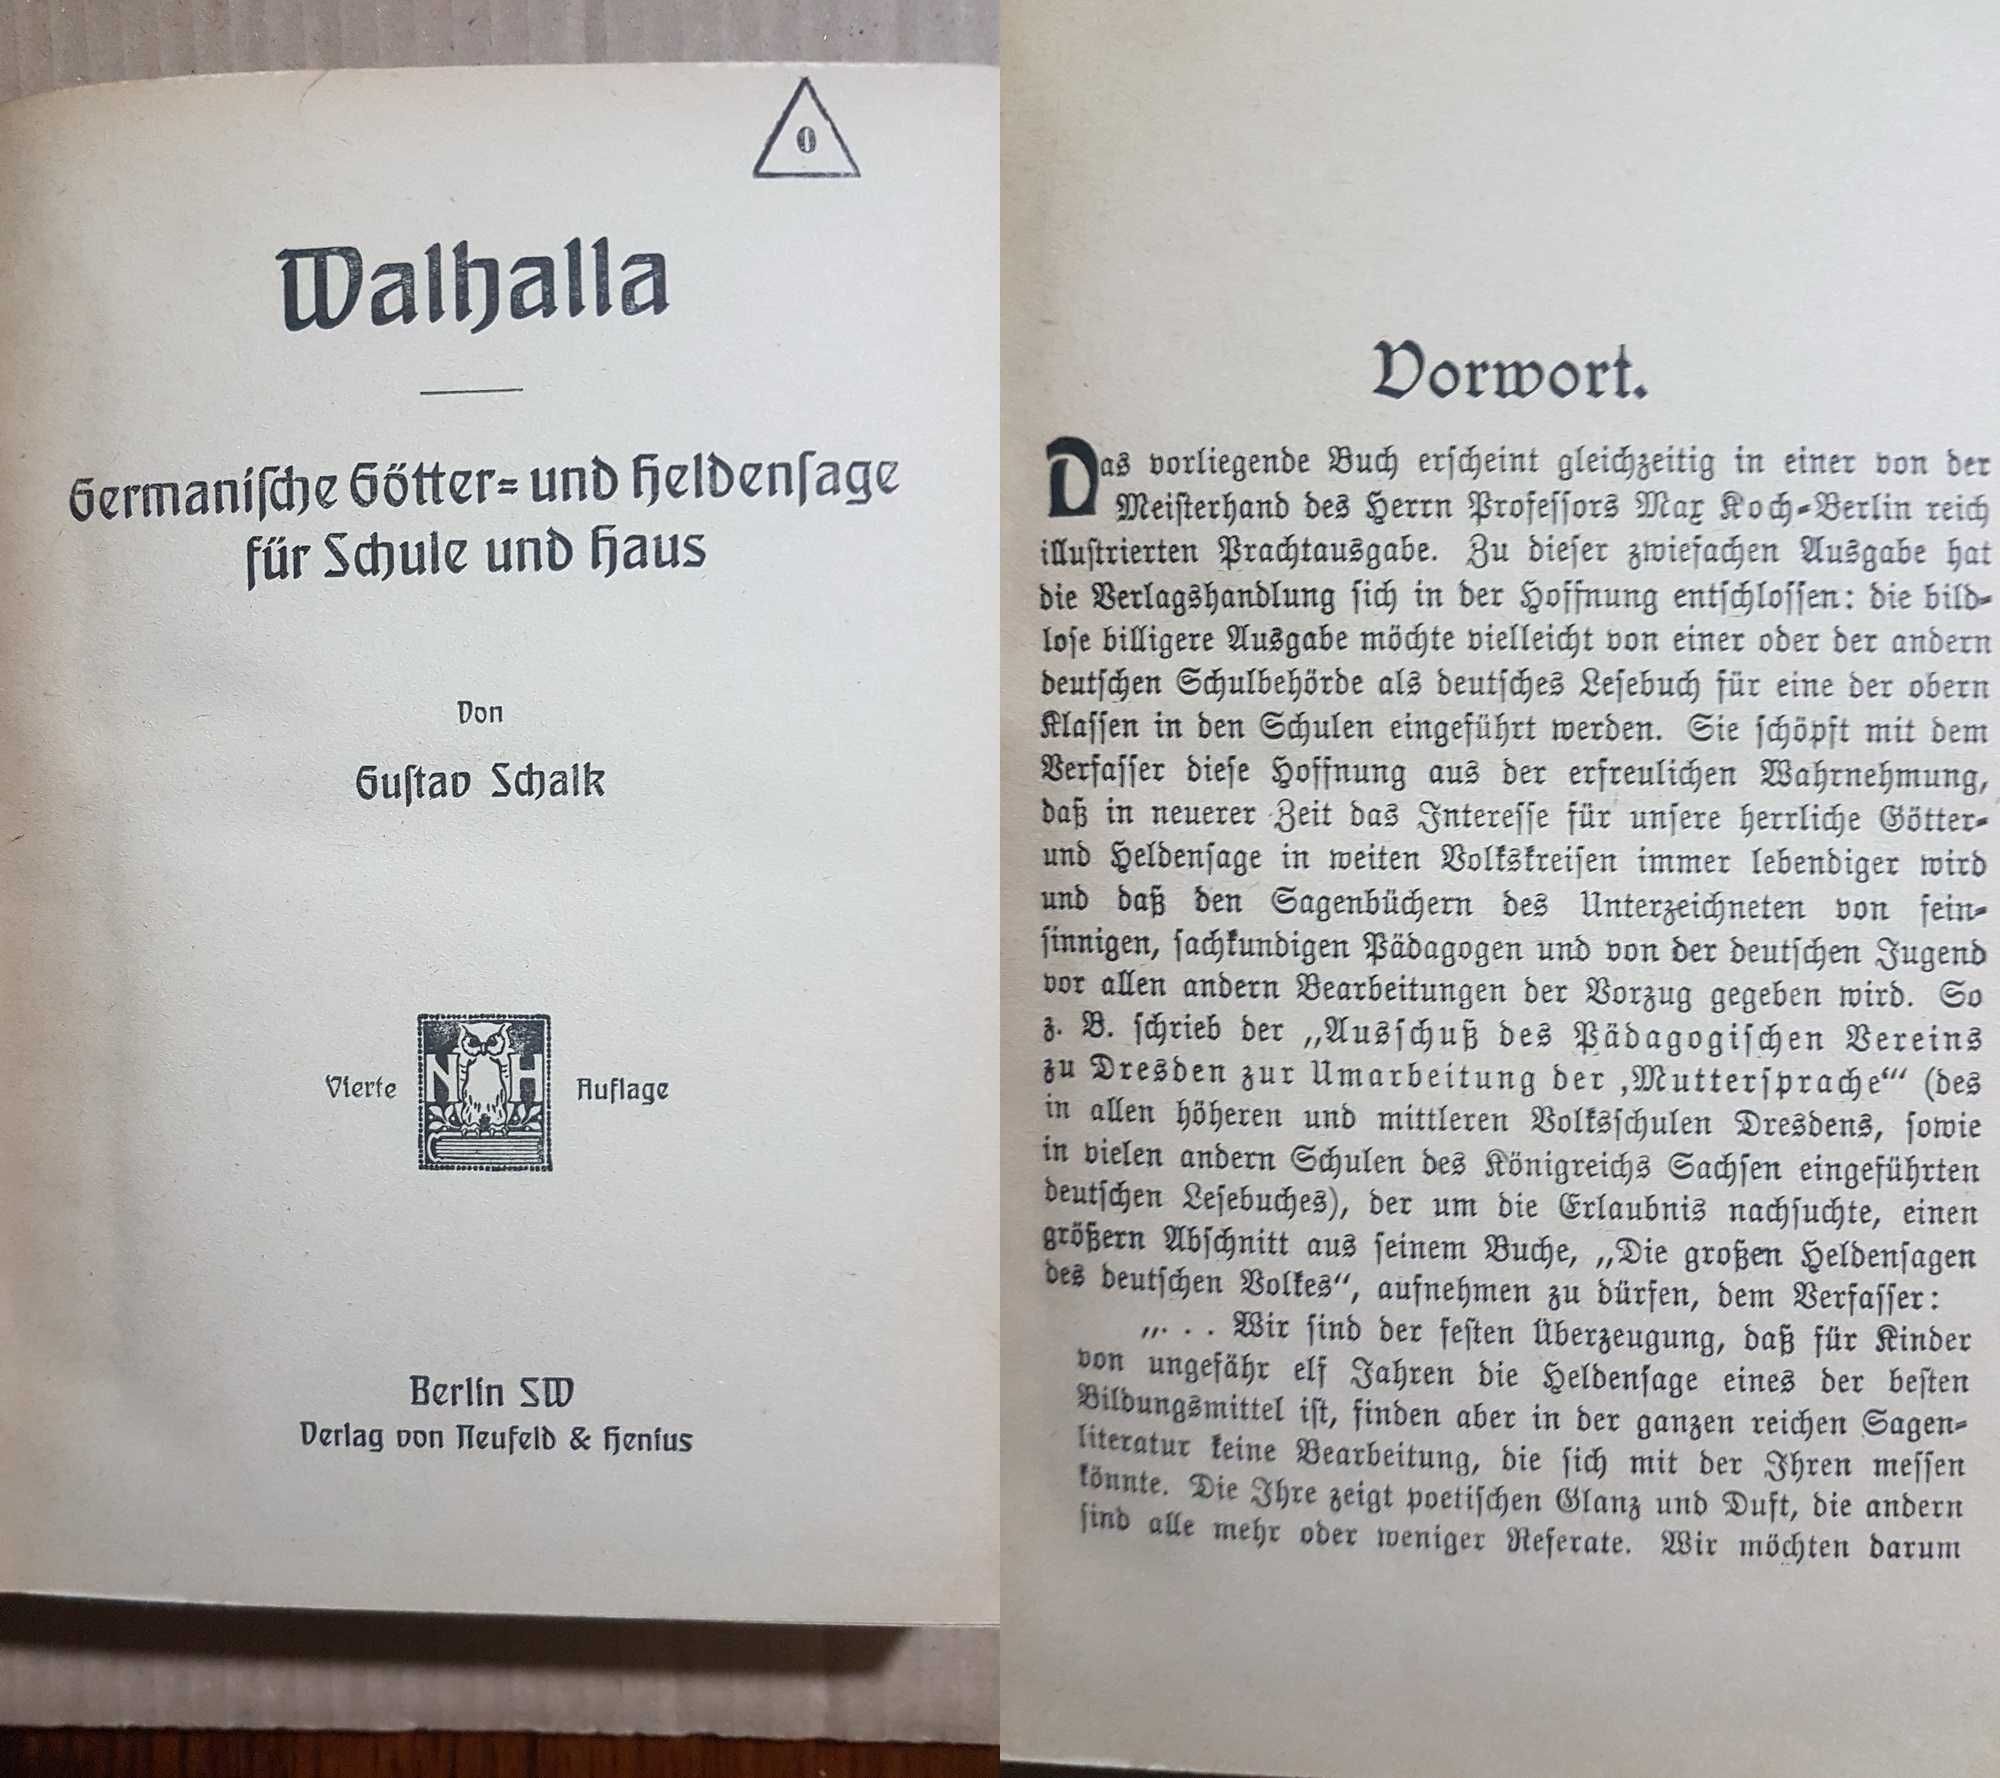 D506-WALHALLA-Zeii germani si legendele eroilor 1906.